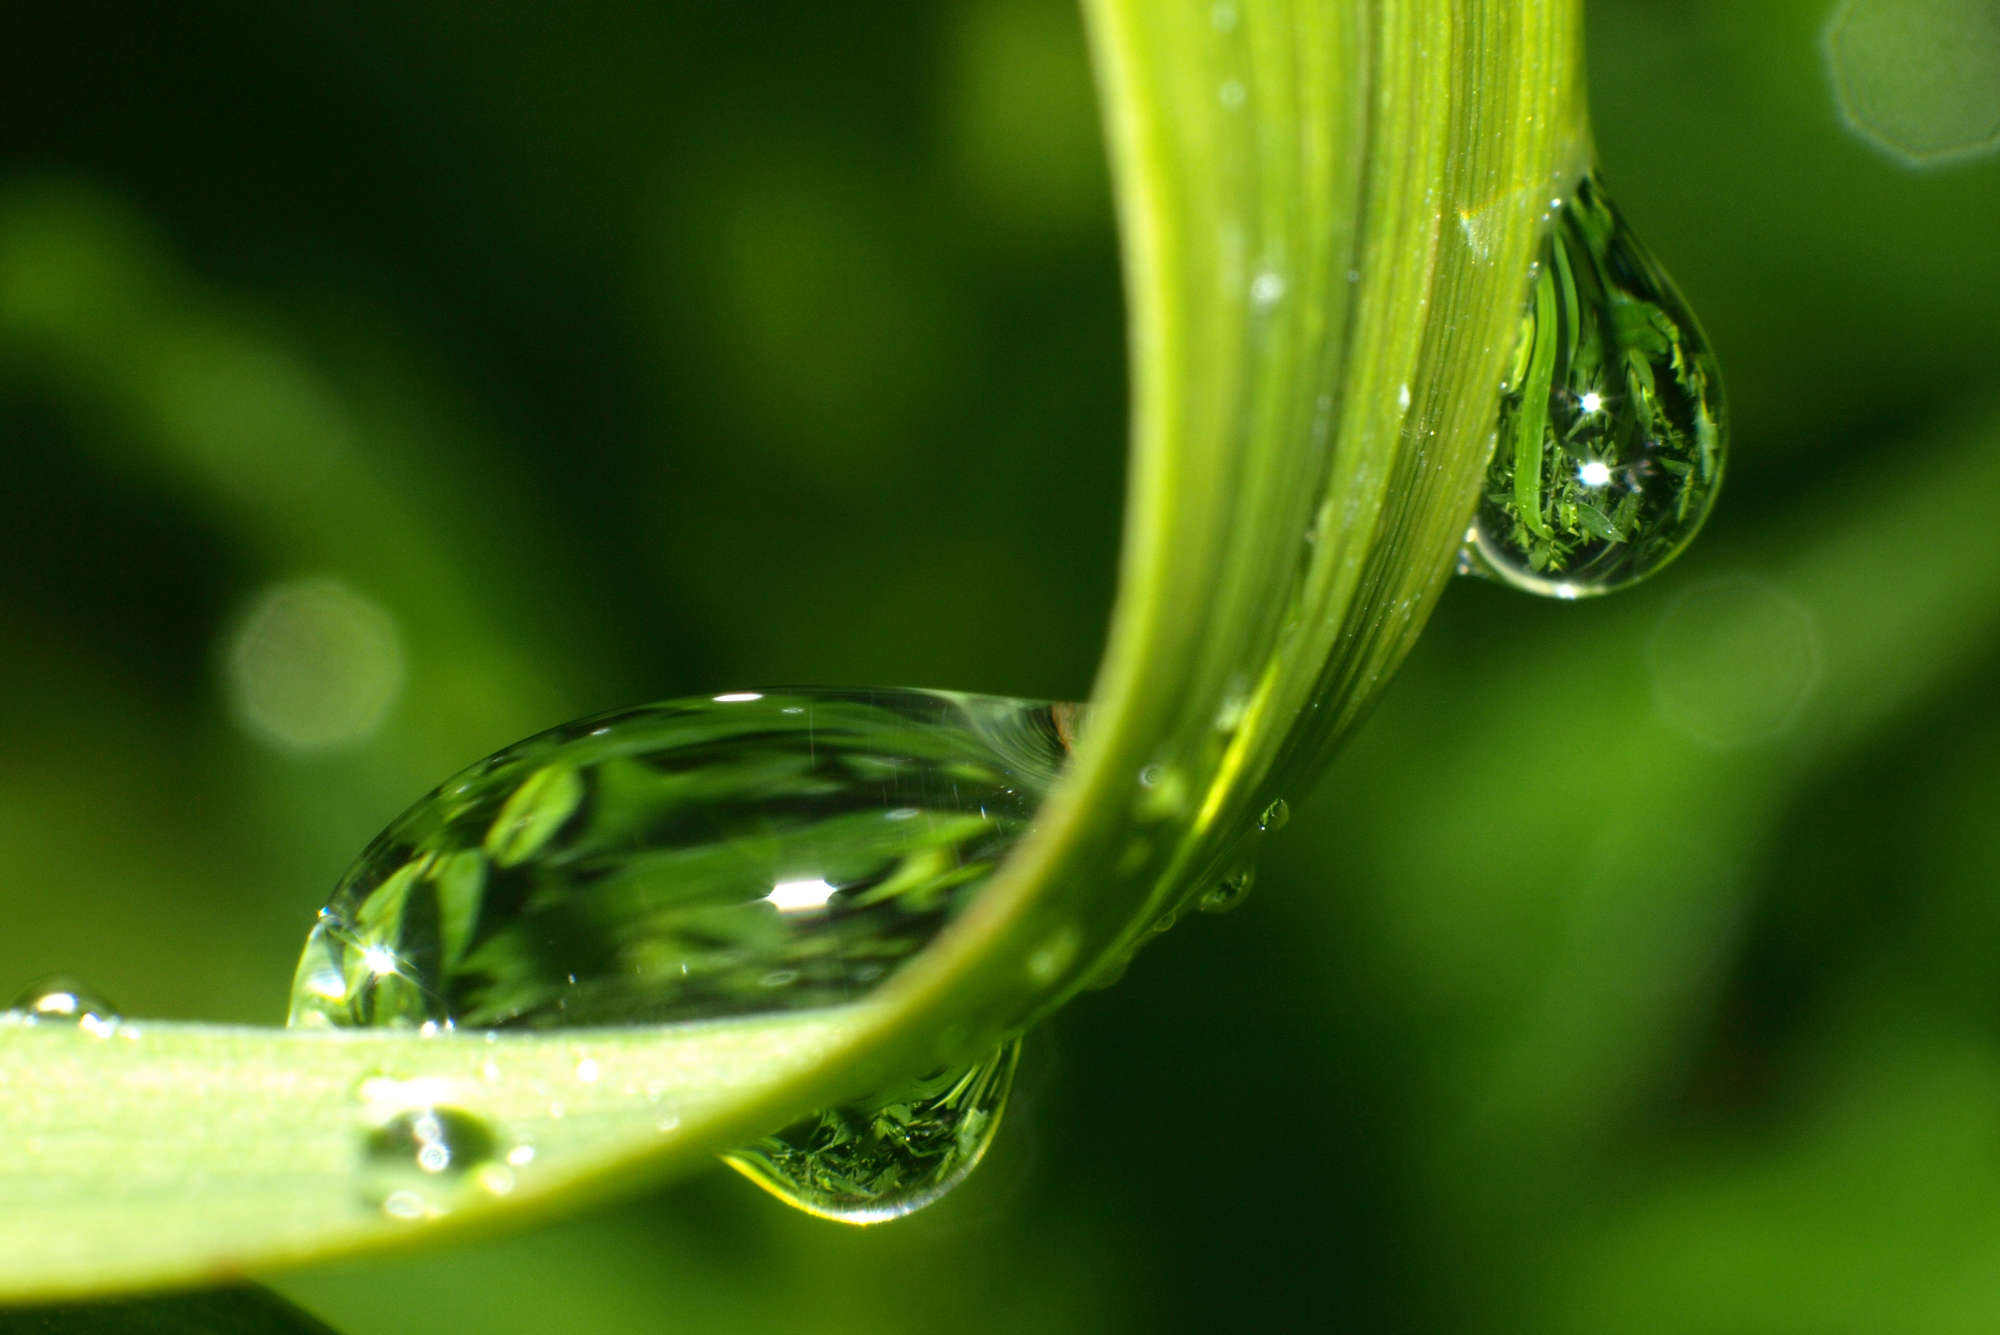             Digital behang grasspriet met waterparels - Premium glad vlies
        